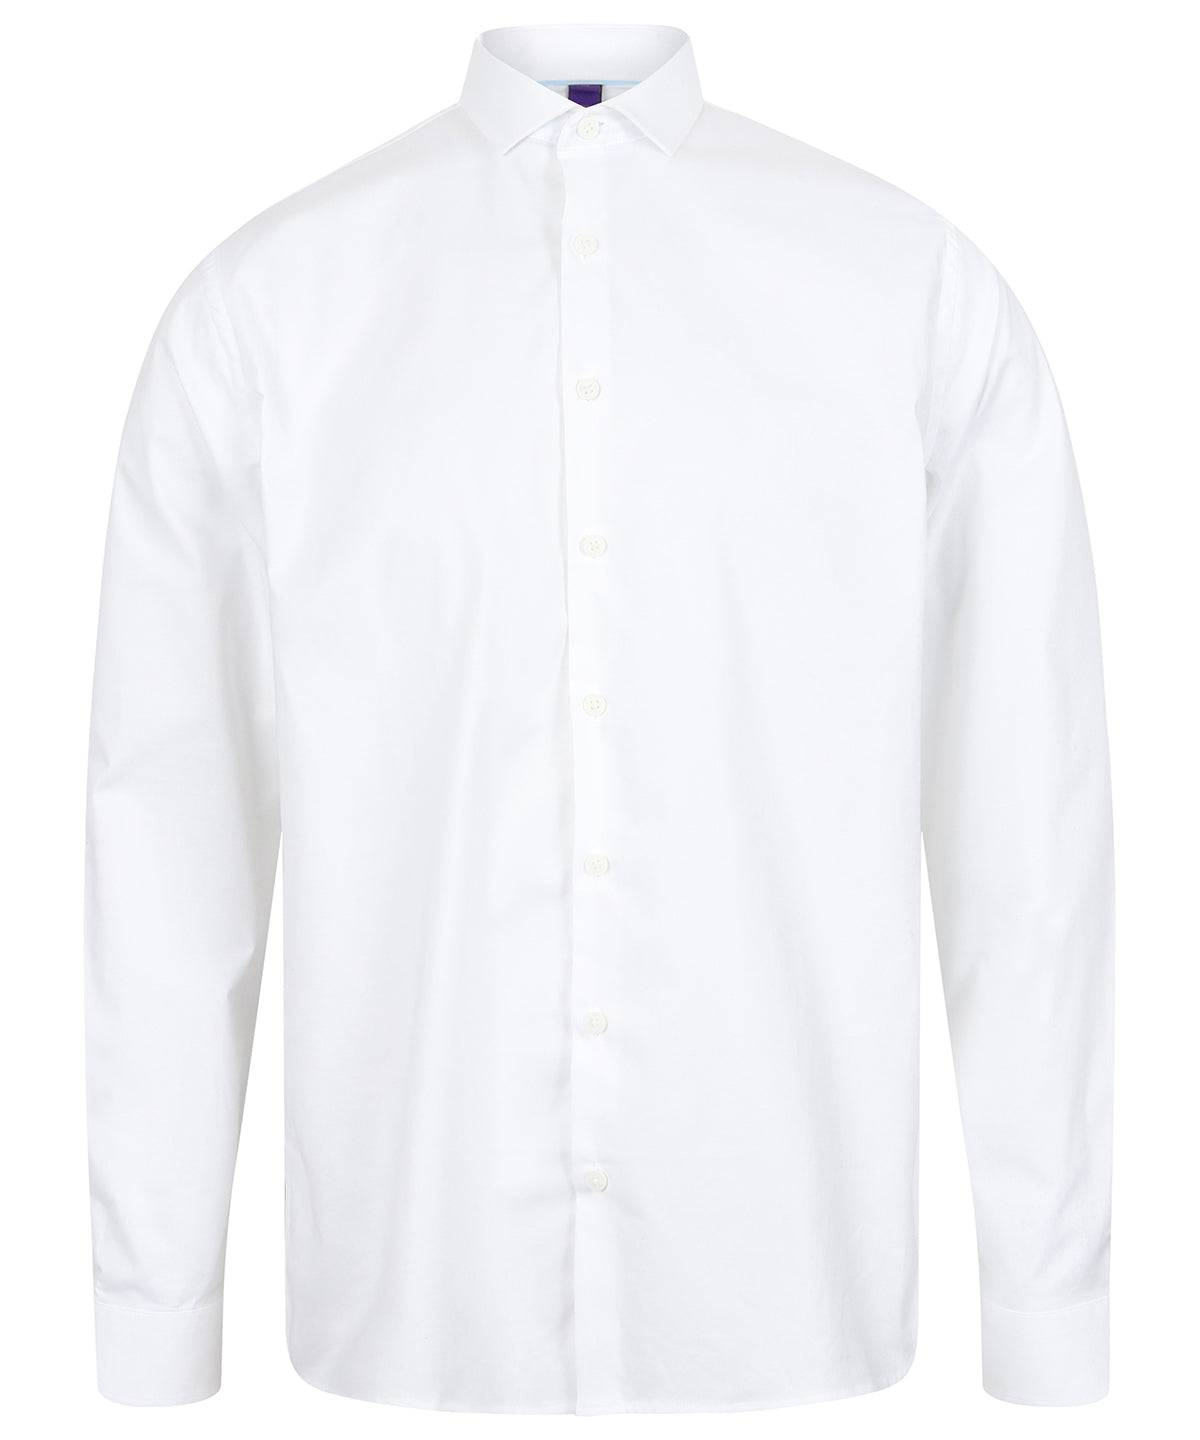 White - Long sleeve stretch shirt